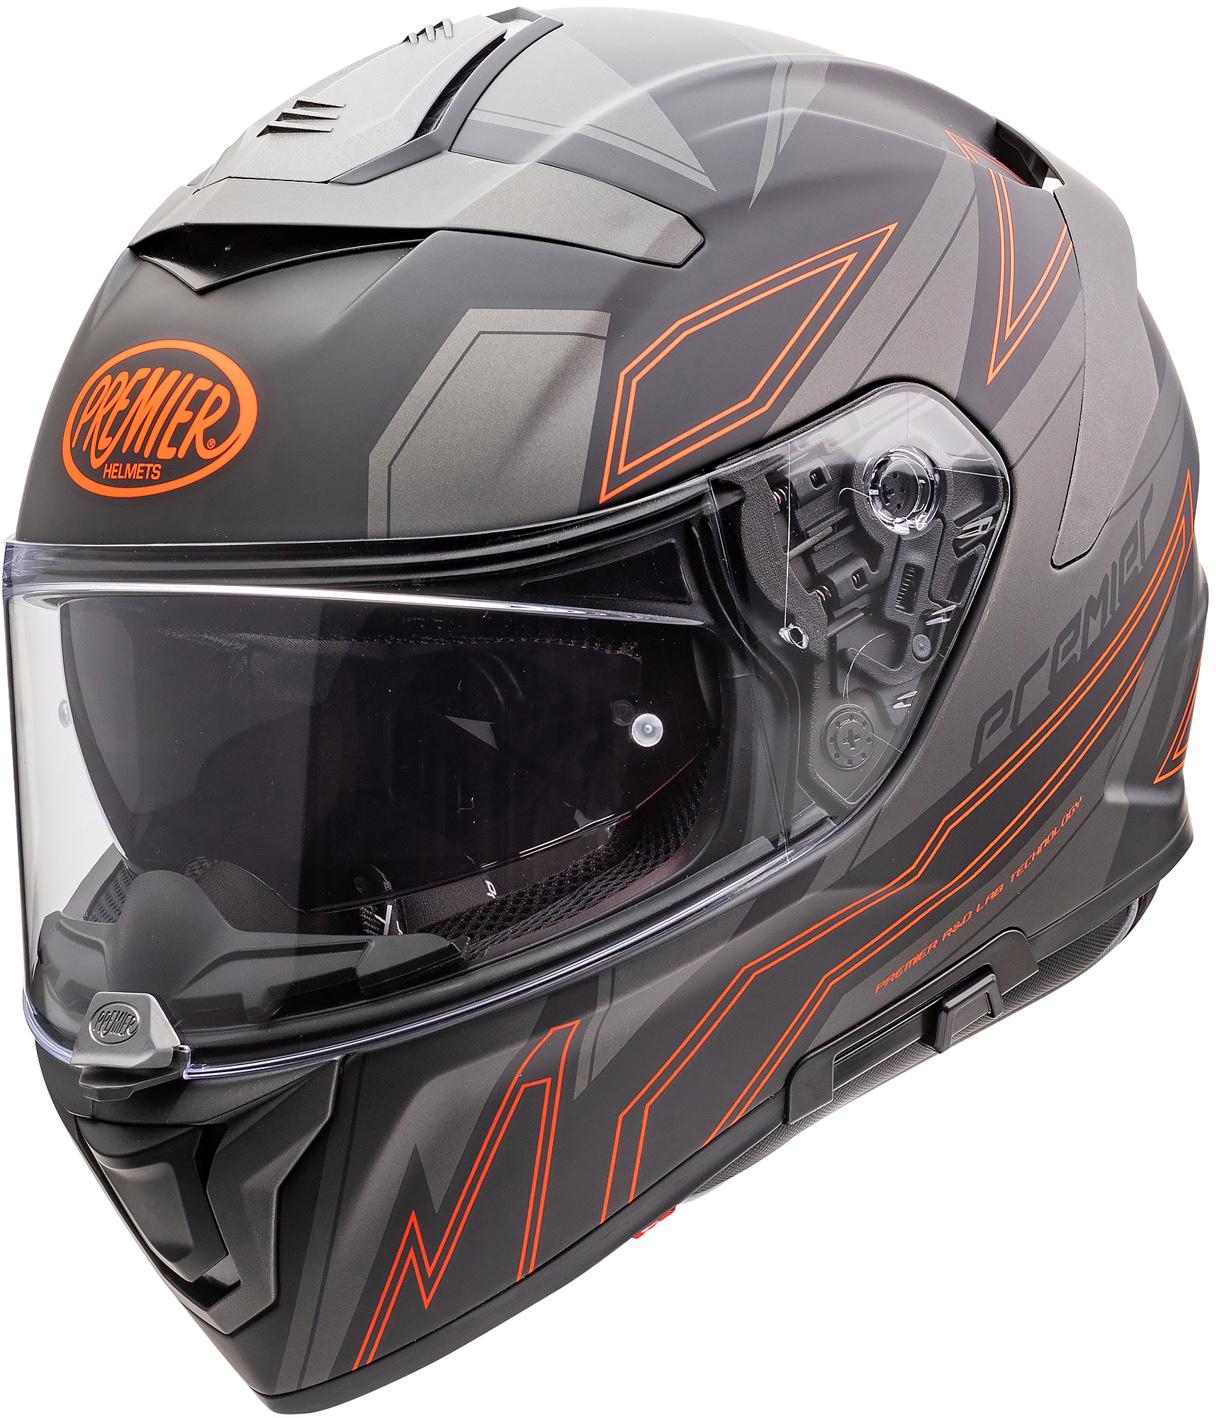 Premier Devil El Full Face Motorcycle Helmet - Black/Orange, L